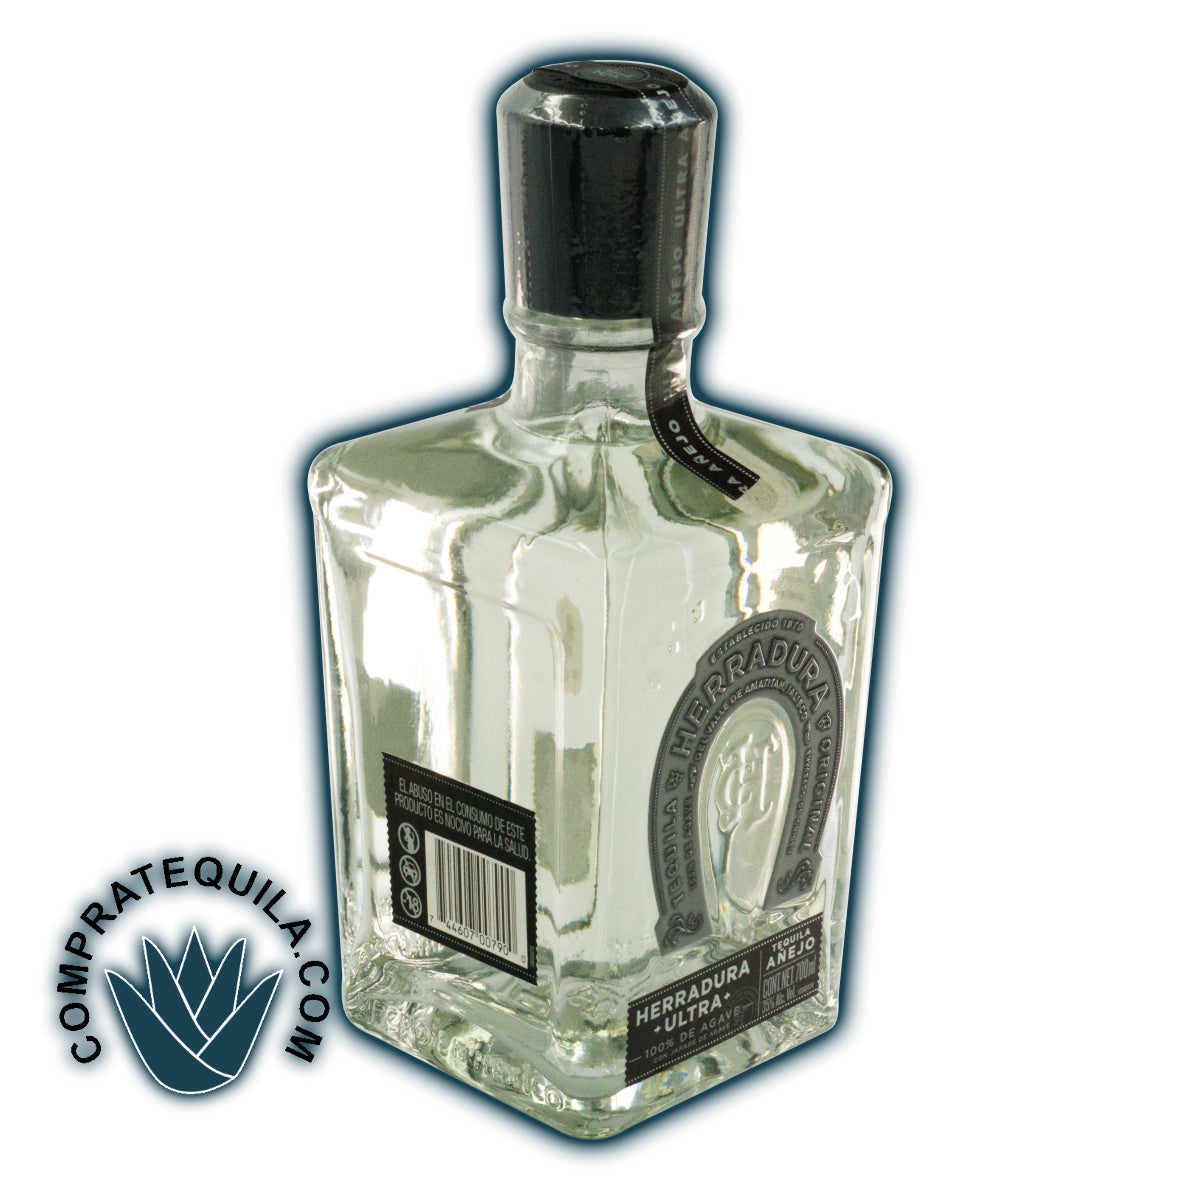 Discover the Supreme Elegance of Herradura Ultra Añejo Tequila at Compratequila.com